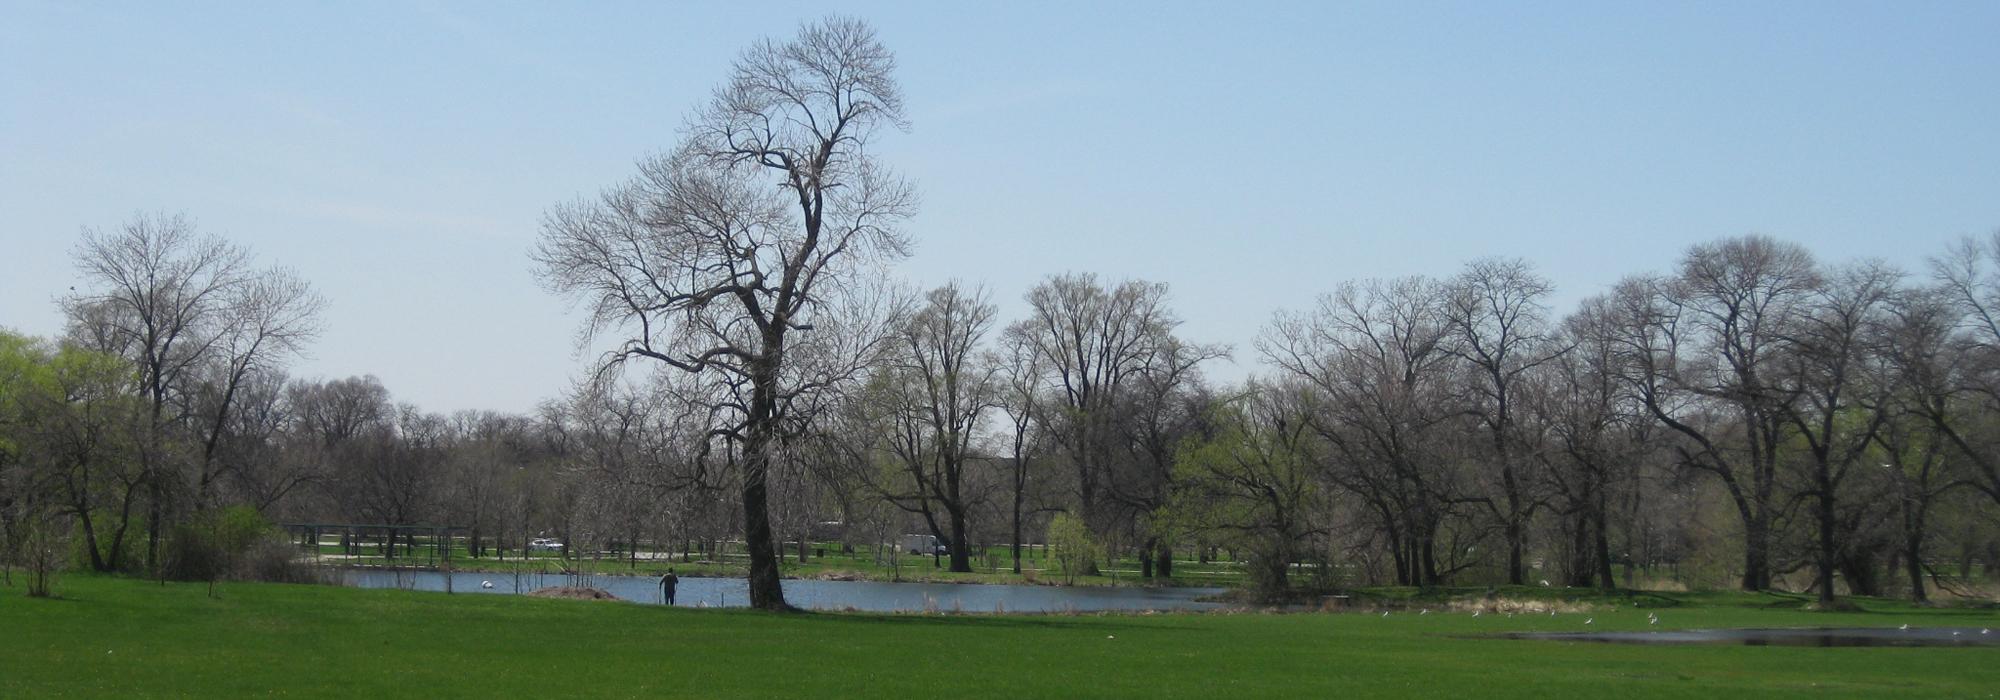 Washington Park, Chicago, IL